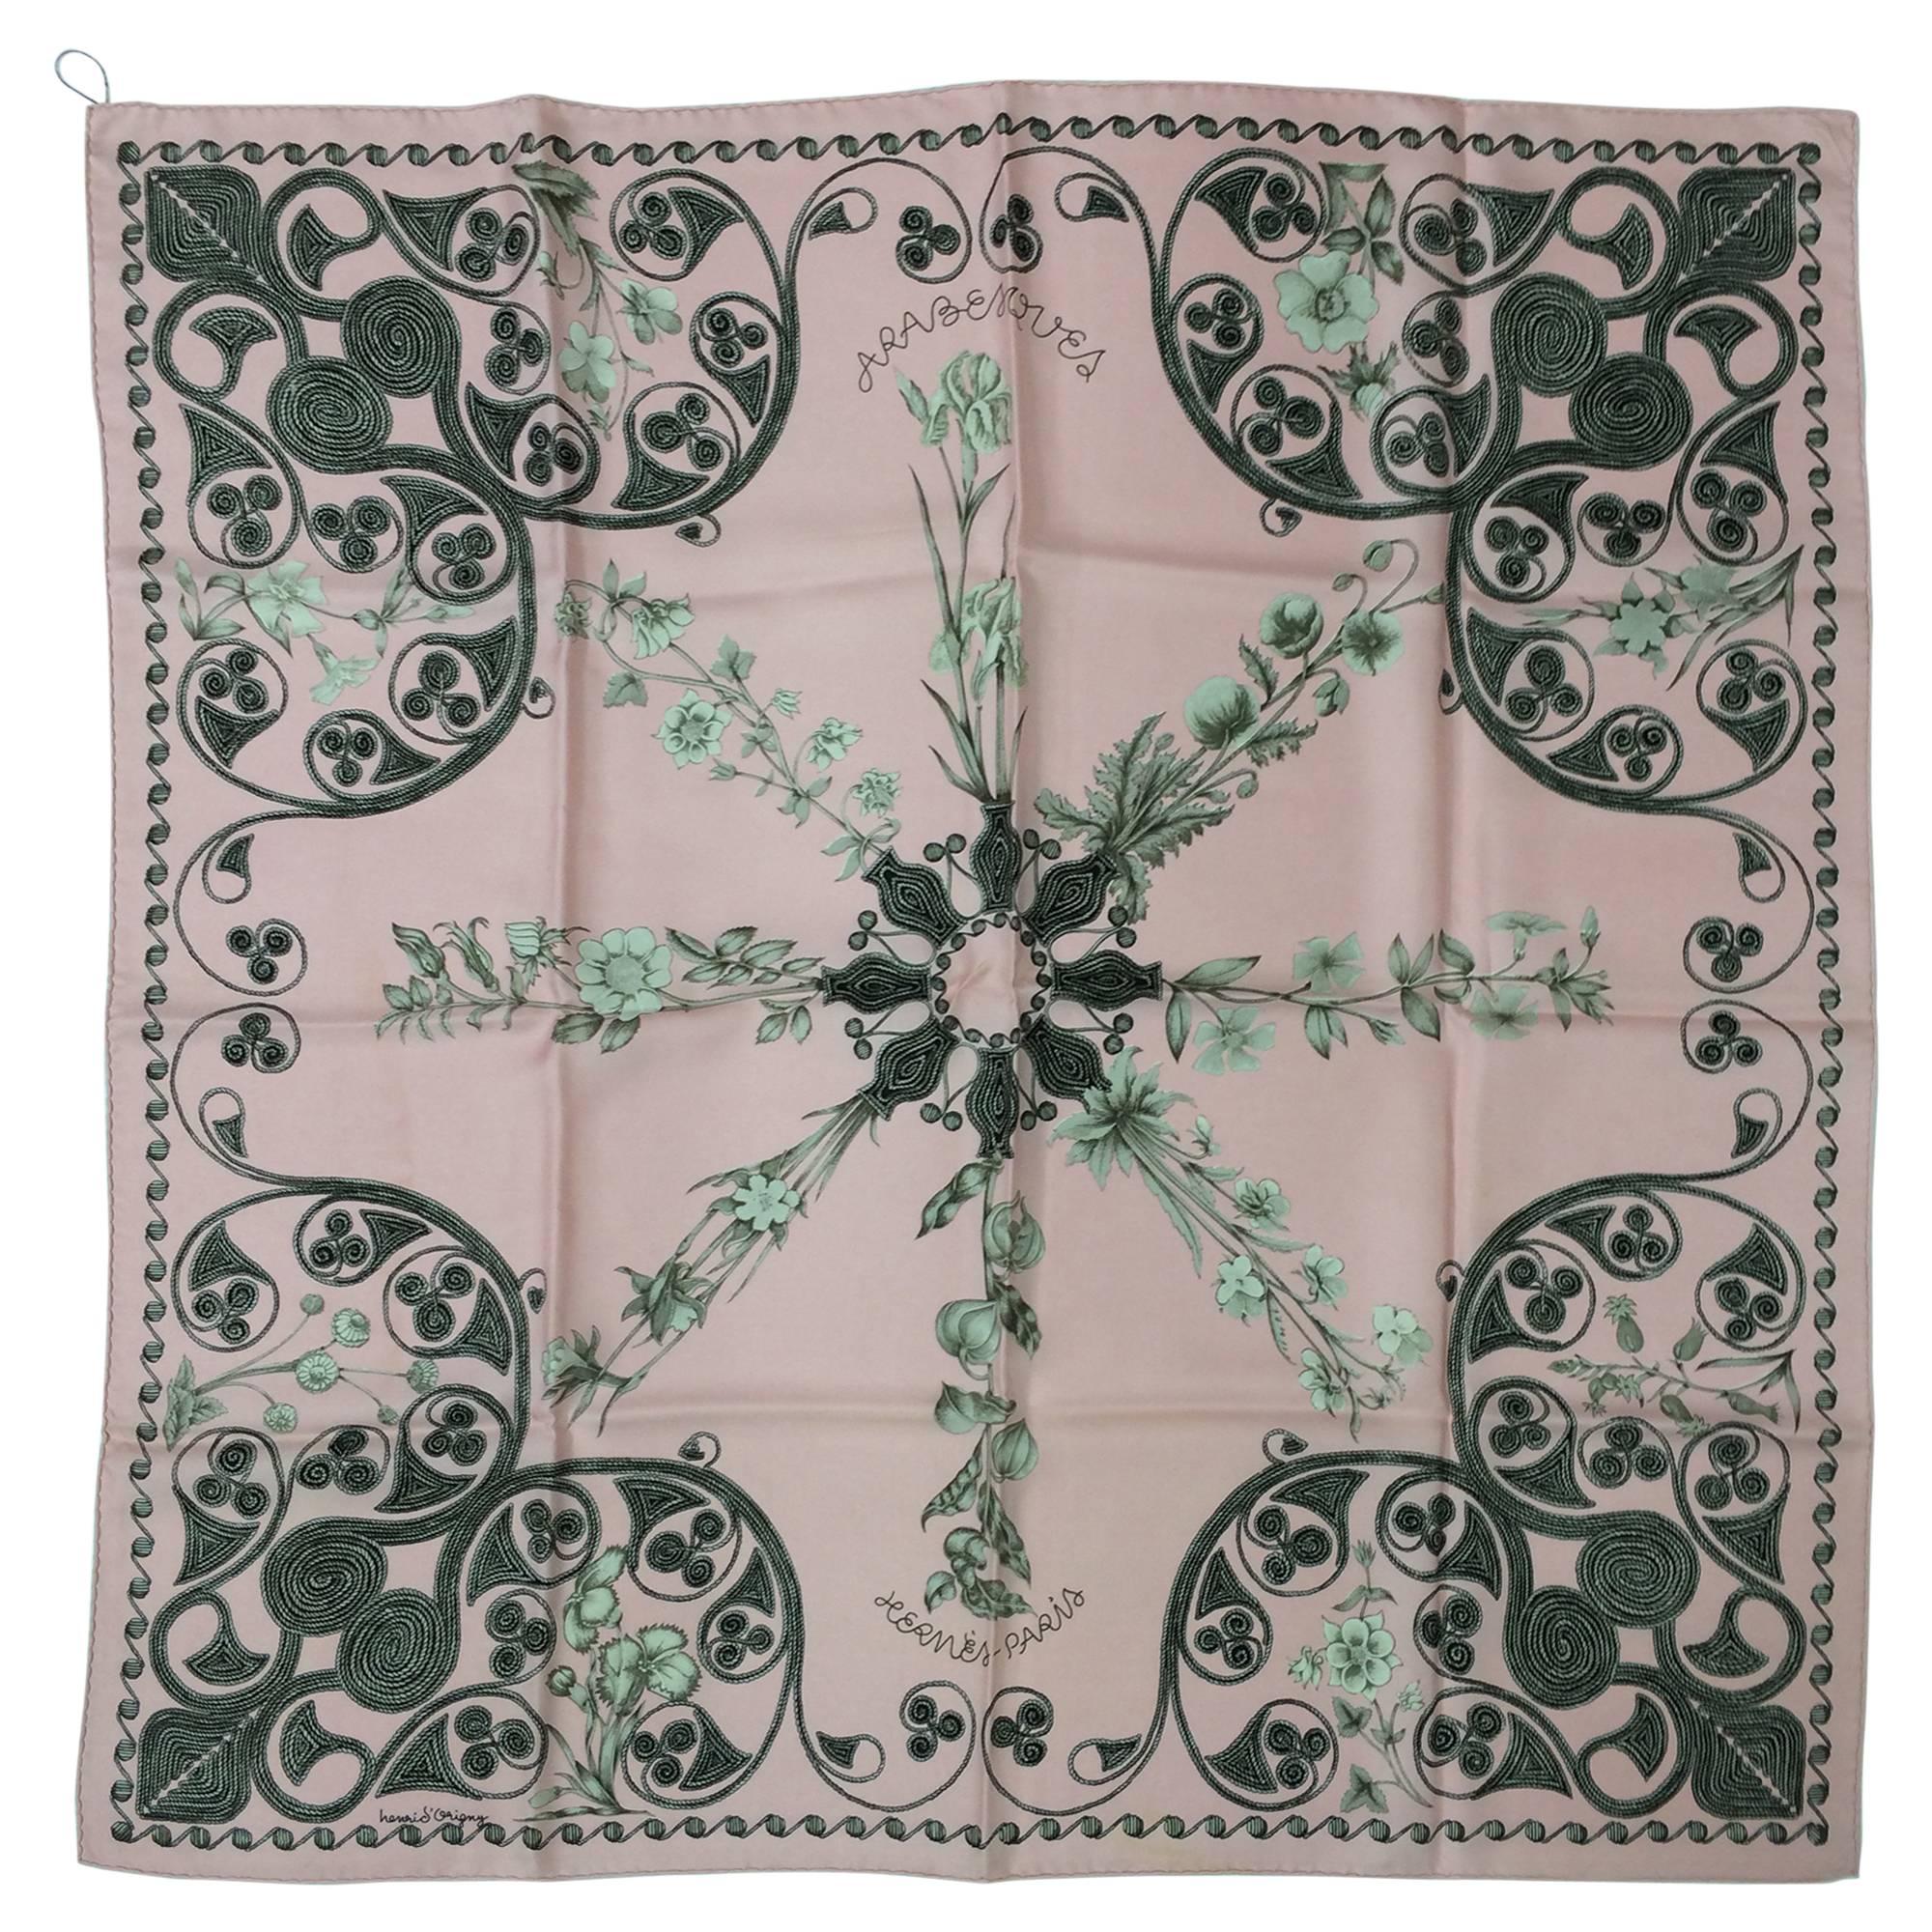 Hermes Paris silk twill scarf Arabesques Henri d'Origny 35" x 35" unworn